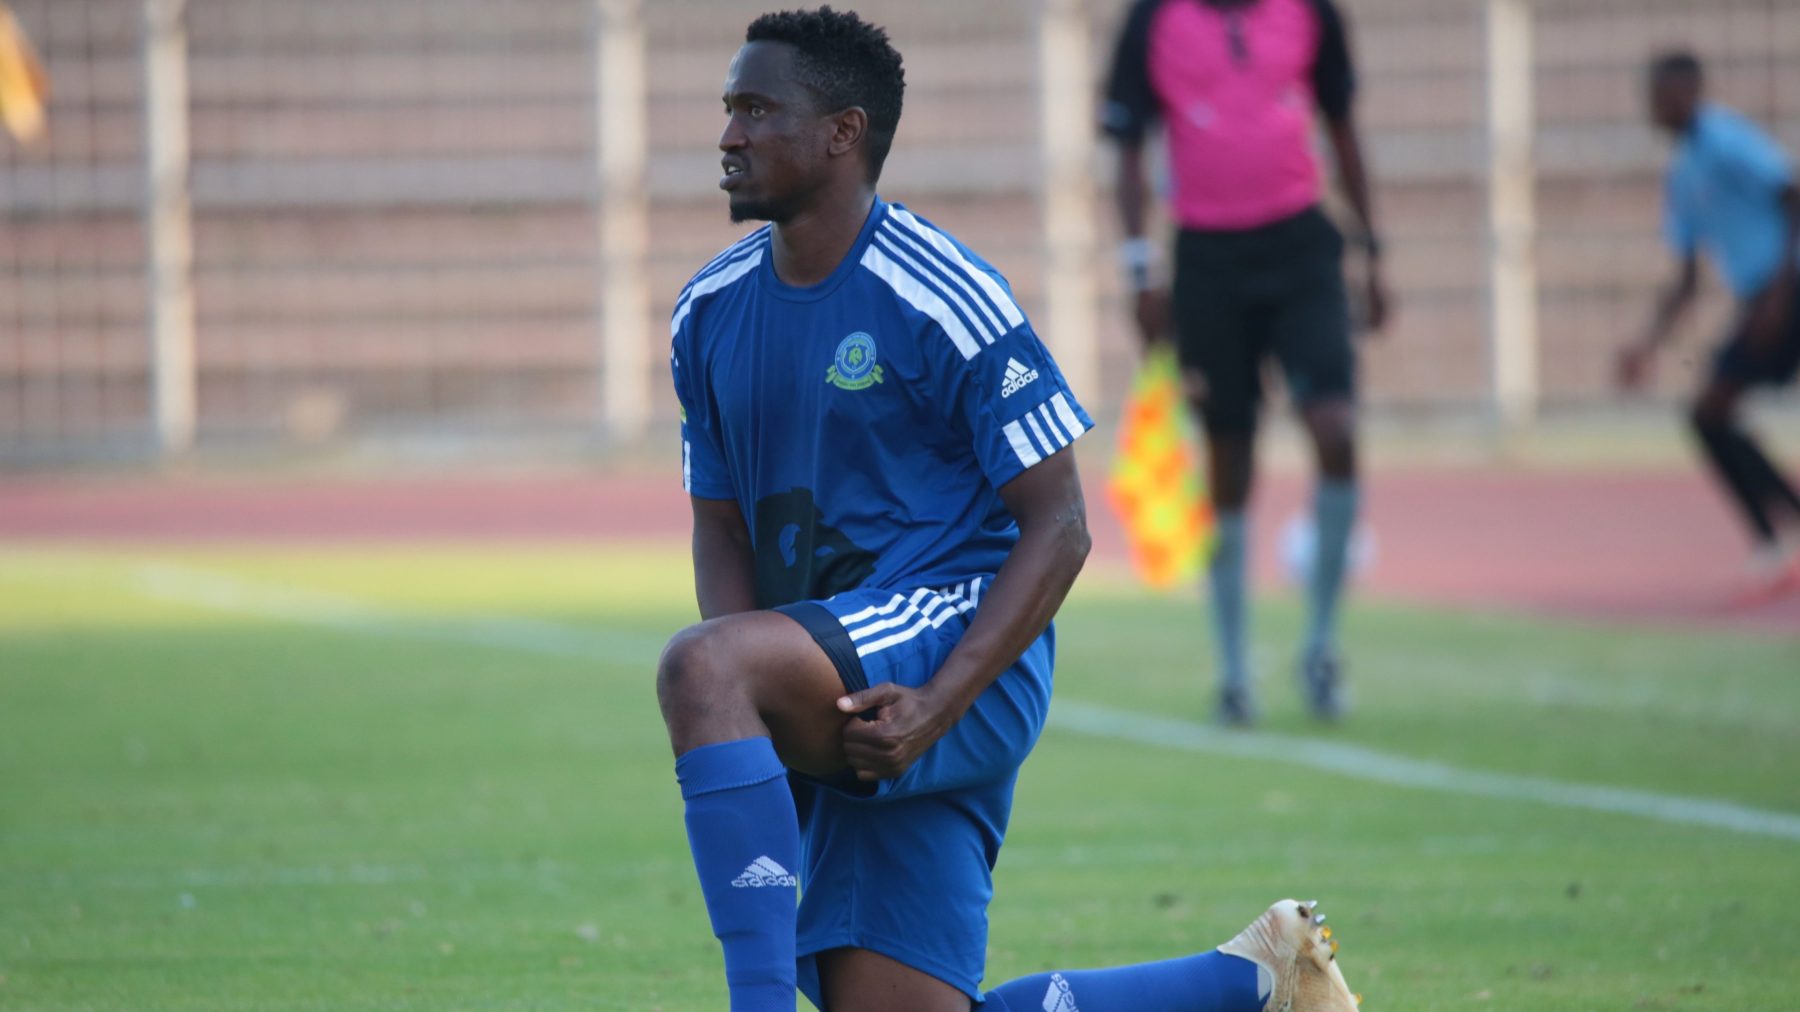 TTM striker Moeketsi Sekola in action for the club